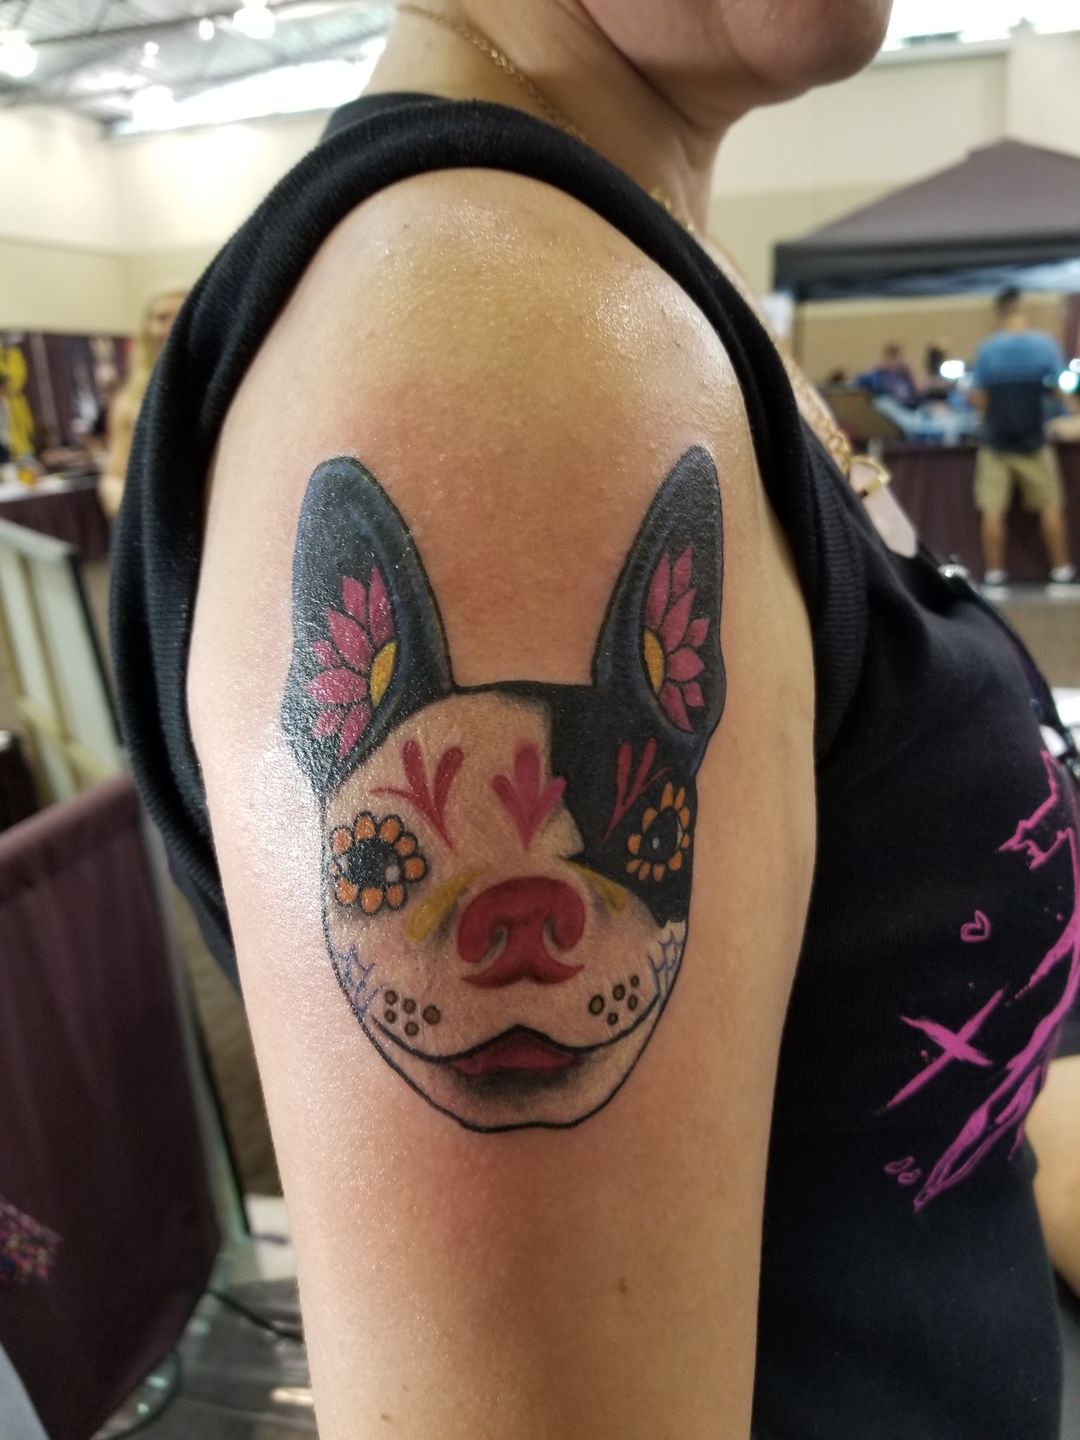 Photo The Tattoo Featuring Pickles The Boston Terrier Is Finished   iBostonTerriercom  iBostonTerriercom